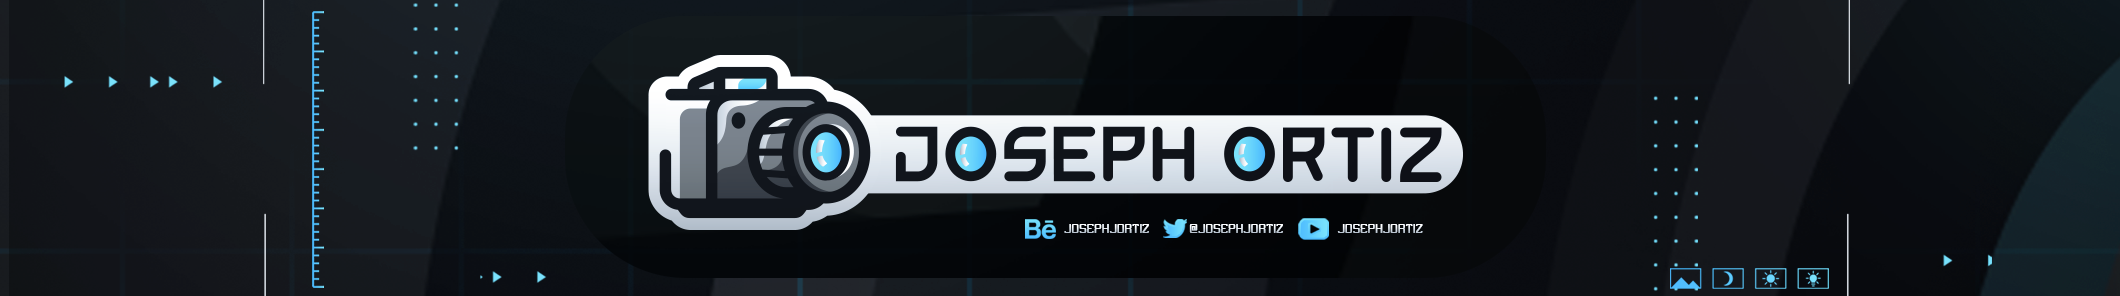 Bannière de profil de Joseph Ortiz